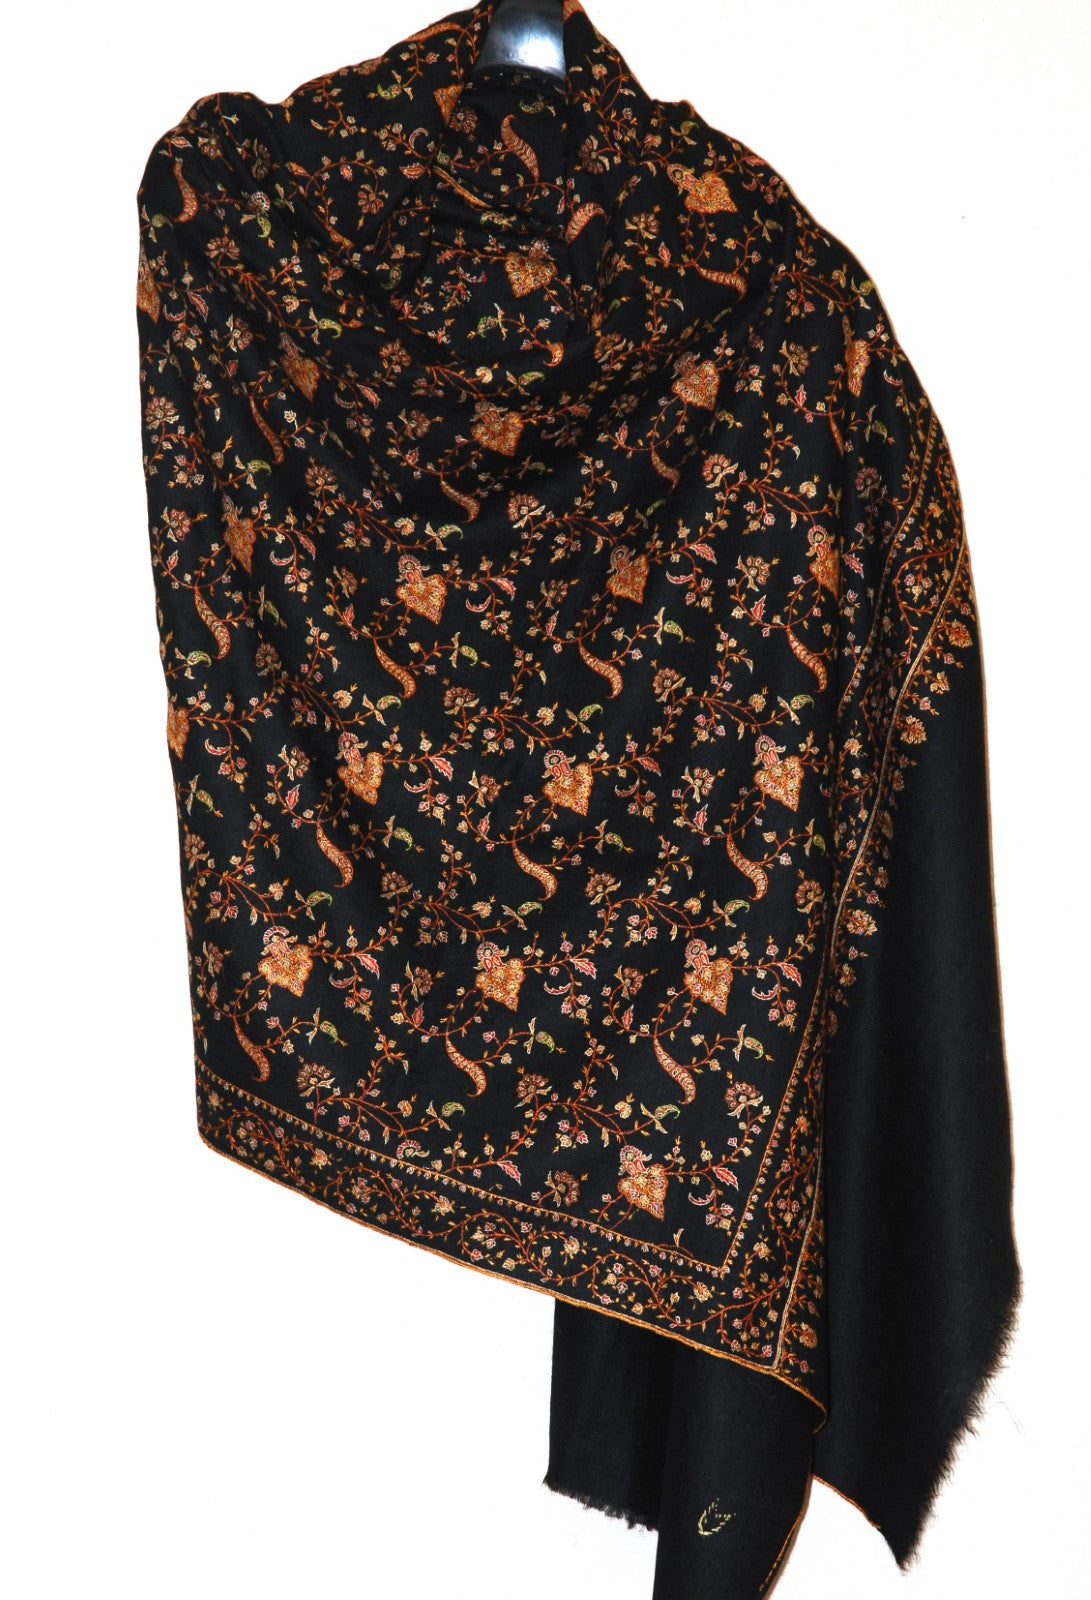 Kashmir Pashmina "Sozni" Needlework Embroidered "Cashmere" Shawl Black, Multicolor #PJL-002